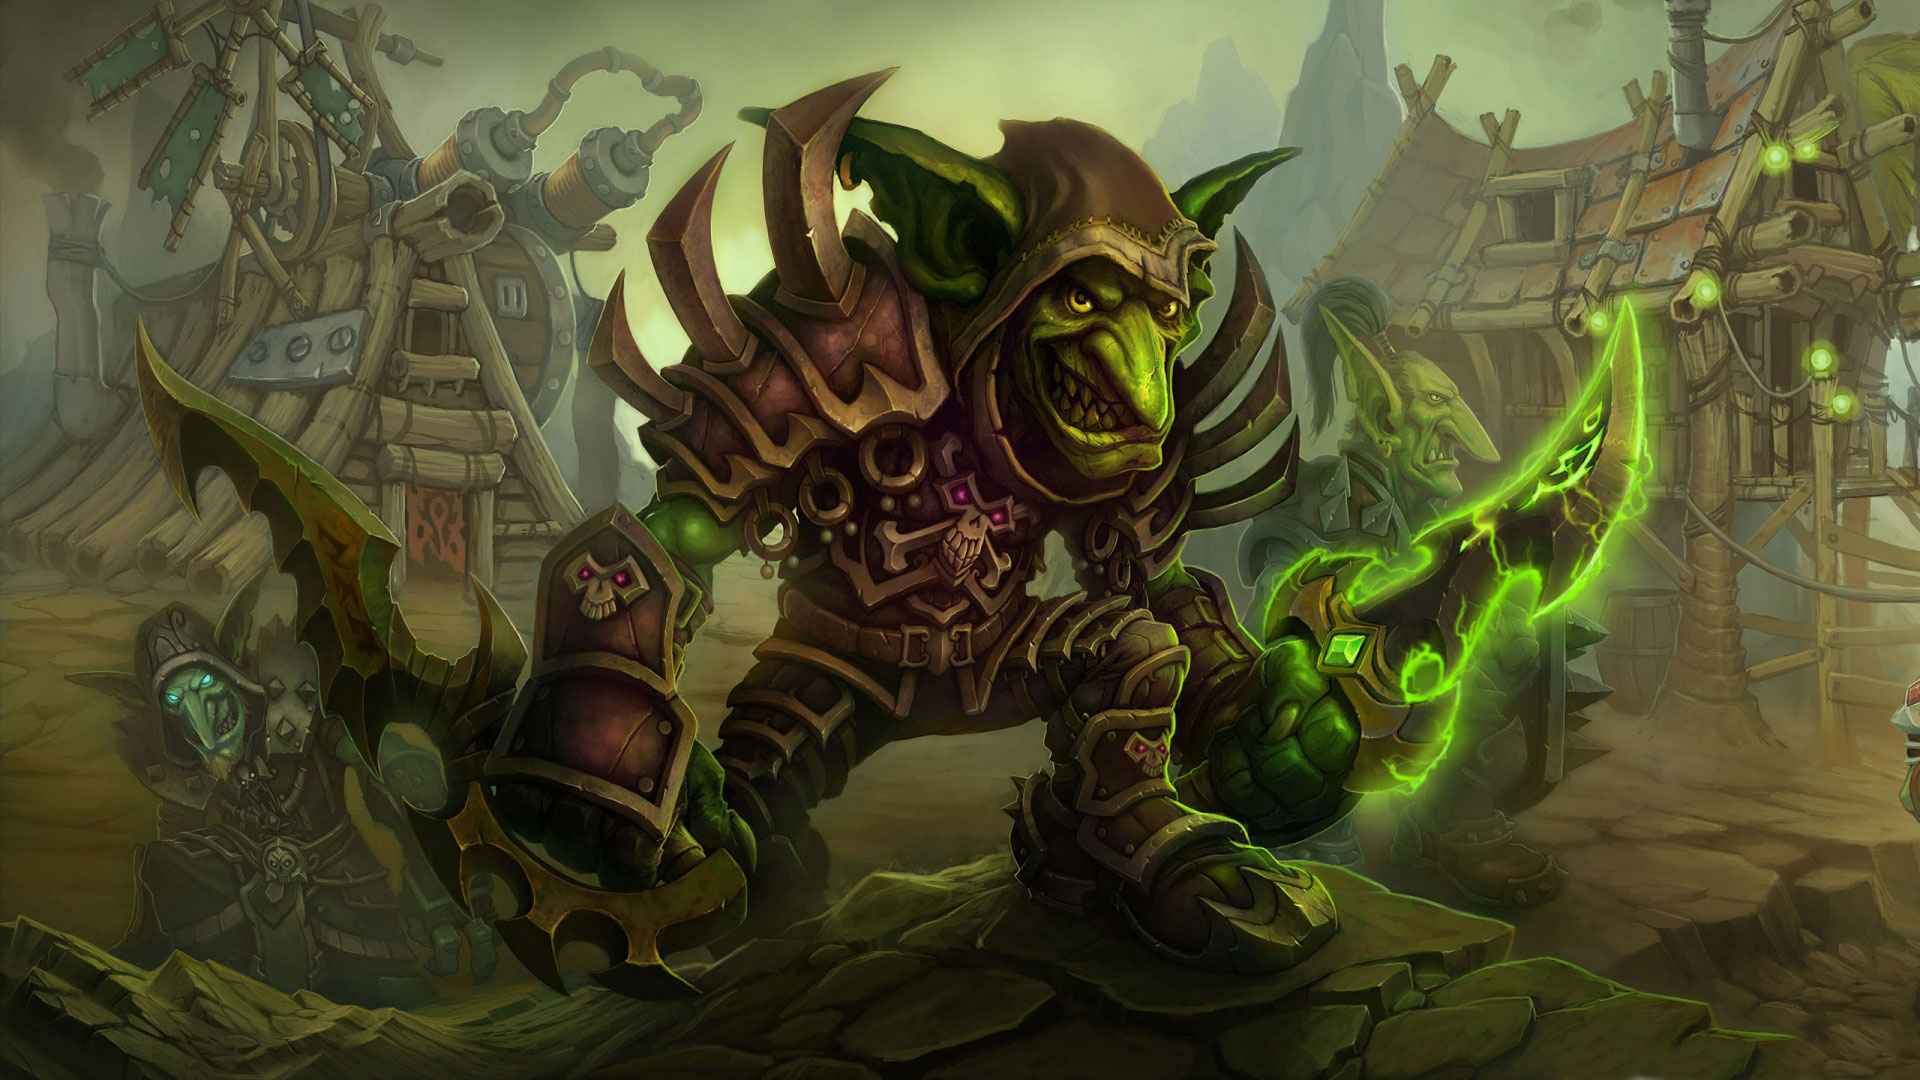 World Of Warcraft Cataclysm Download Mac